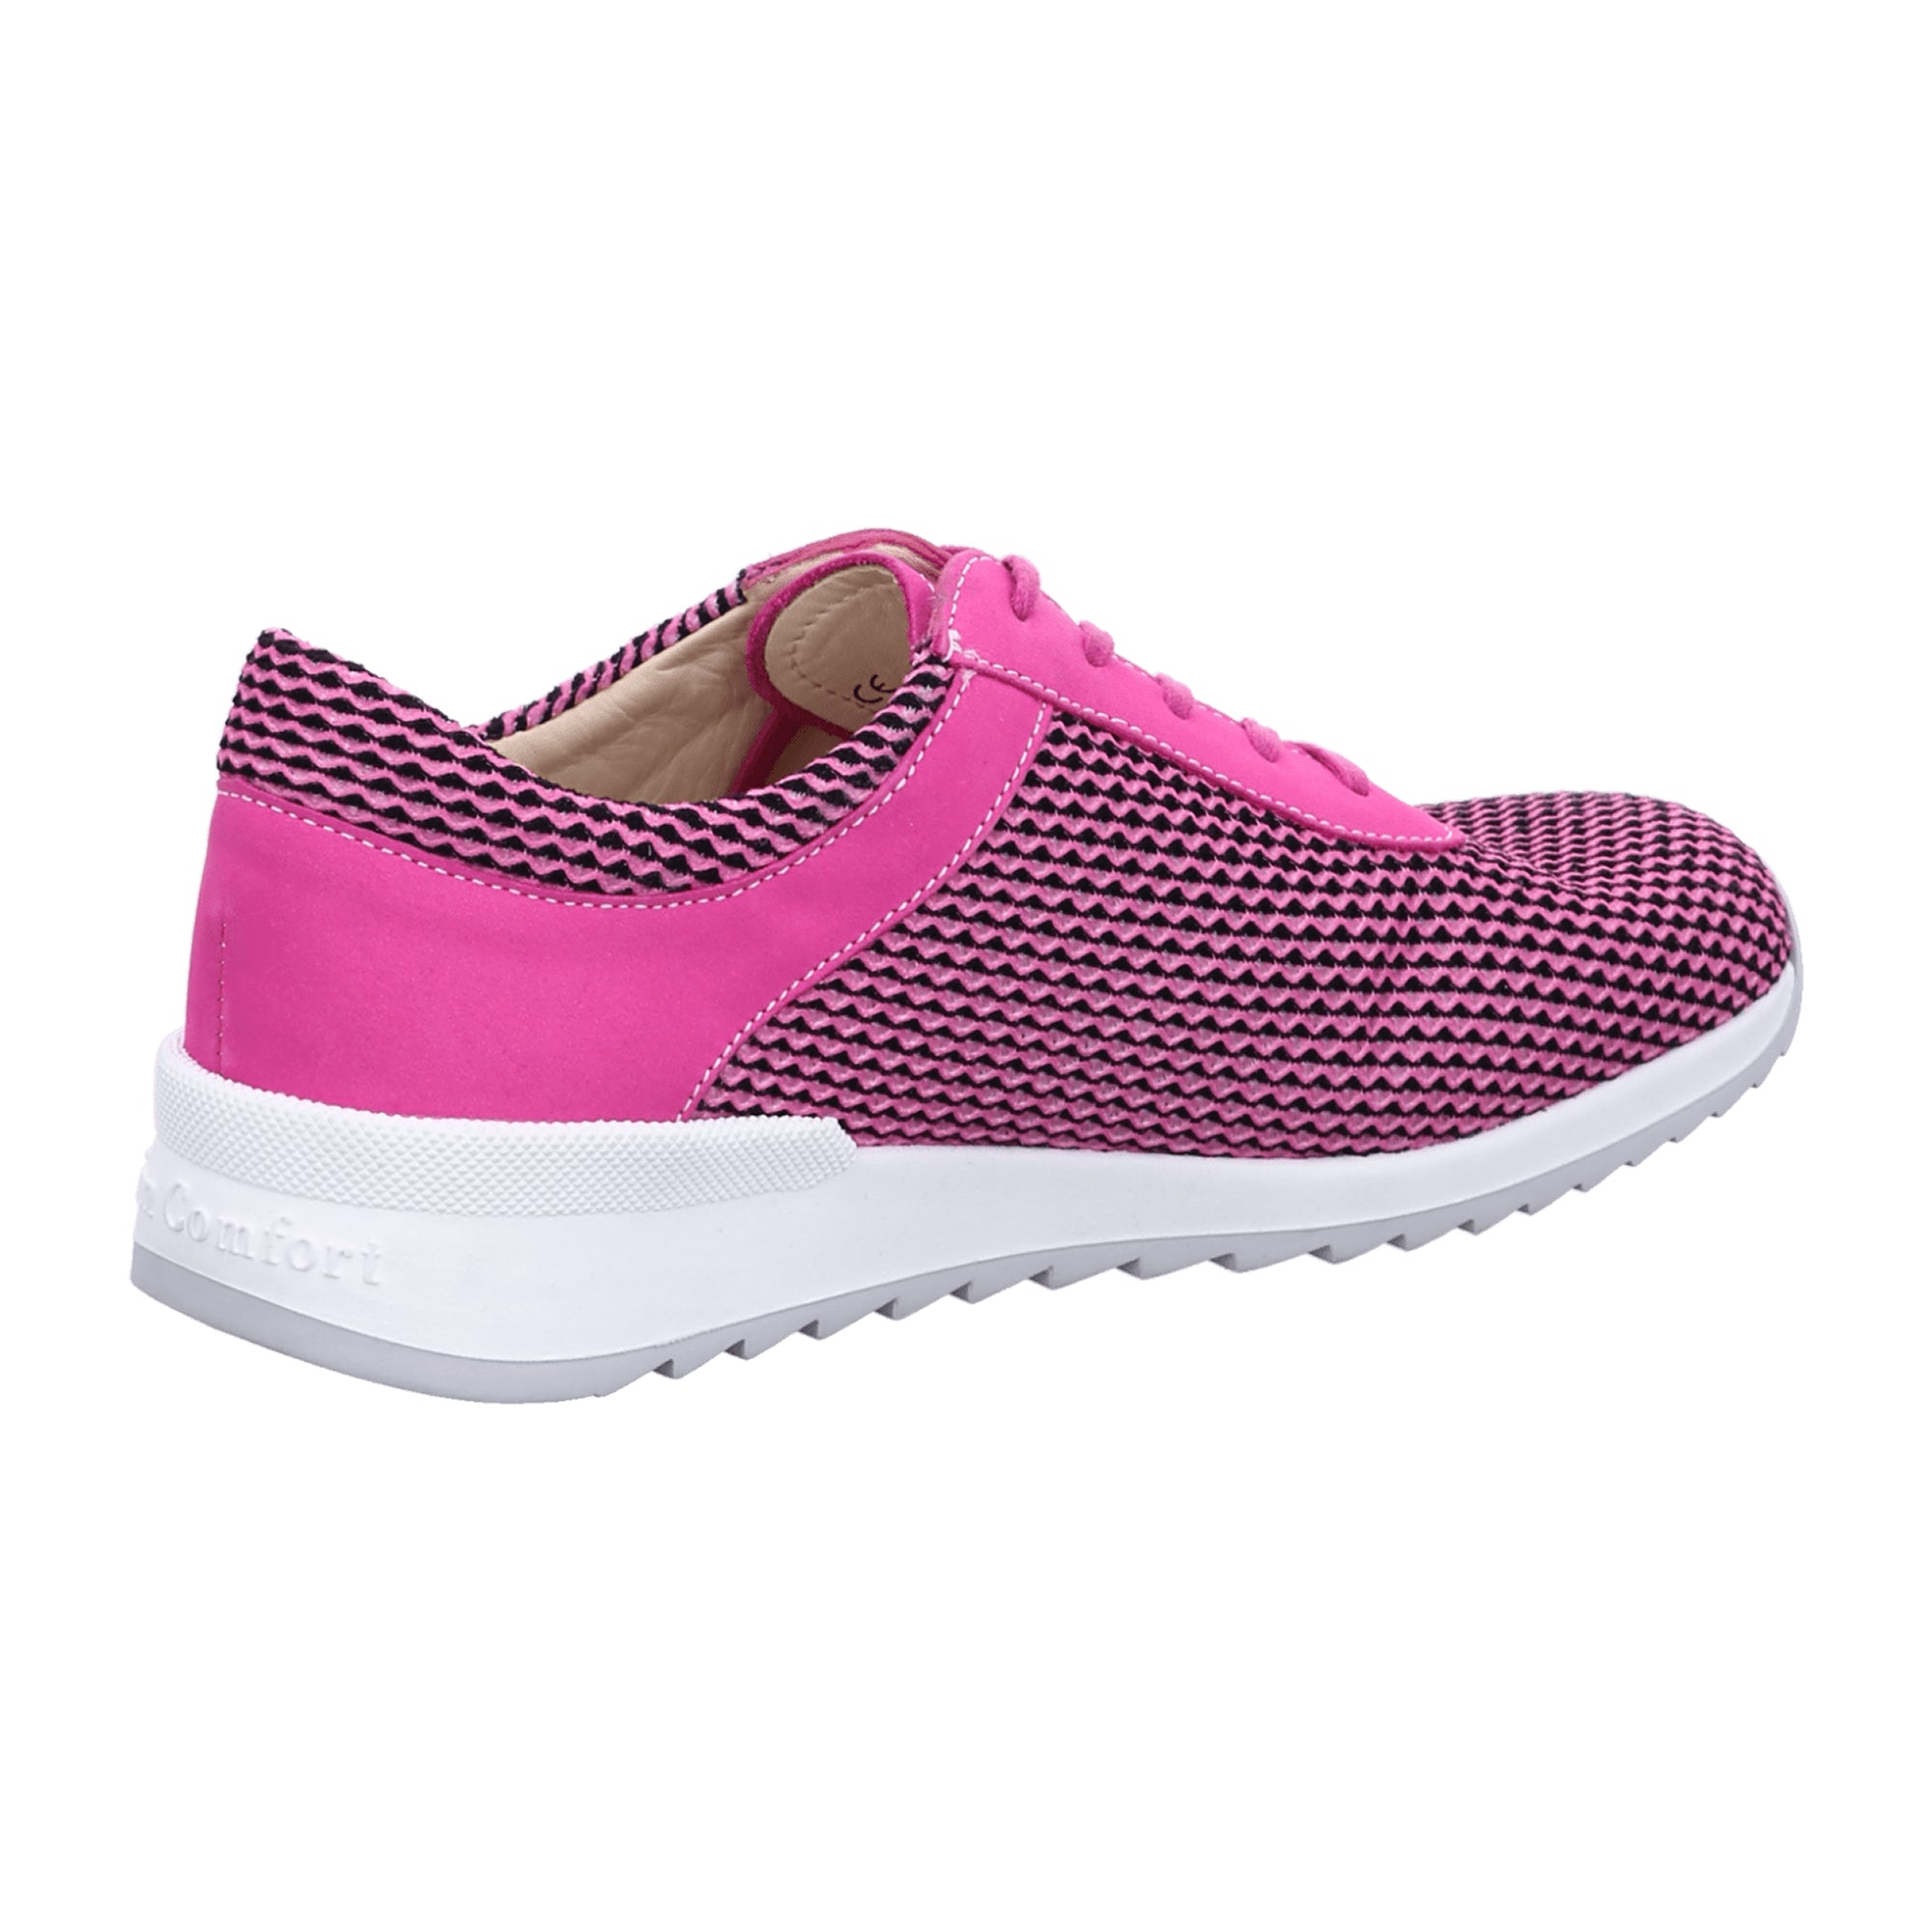 Finn Comfort CitySport D Women's Pink Comfort Shoes - Stylish & Durable